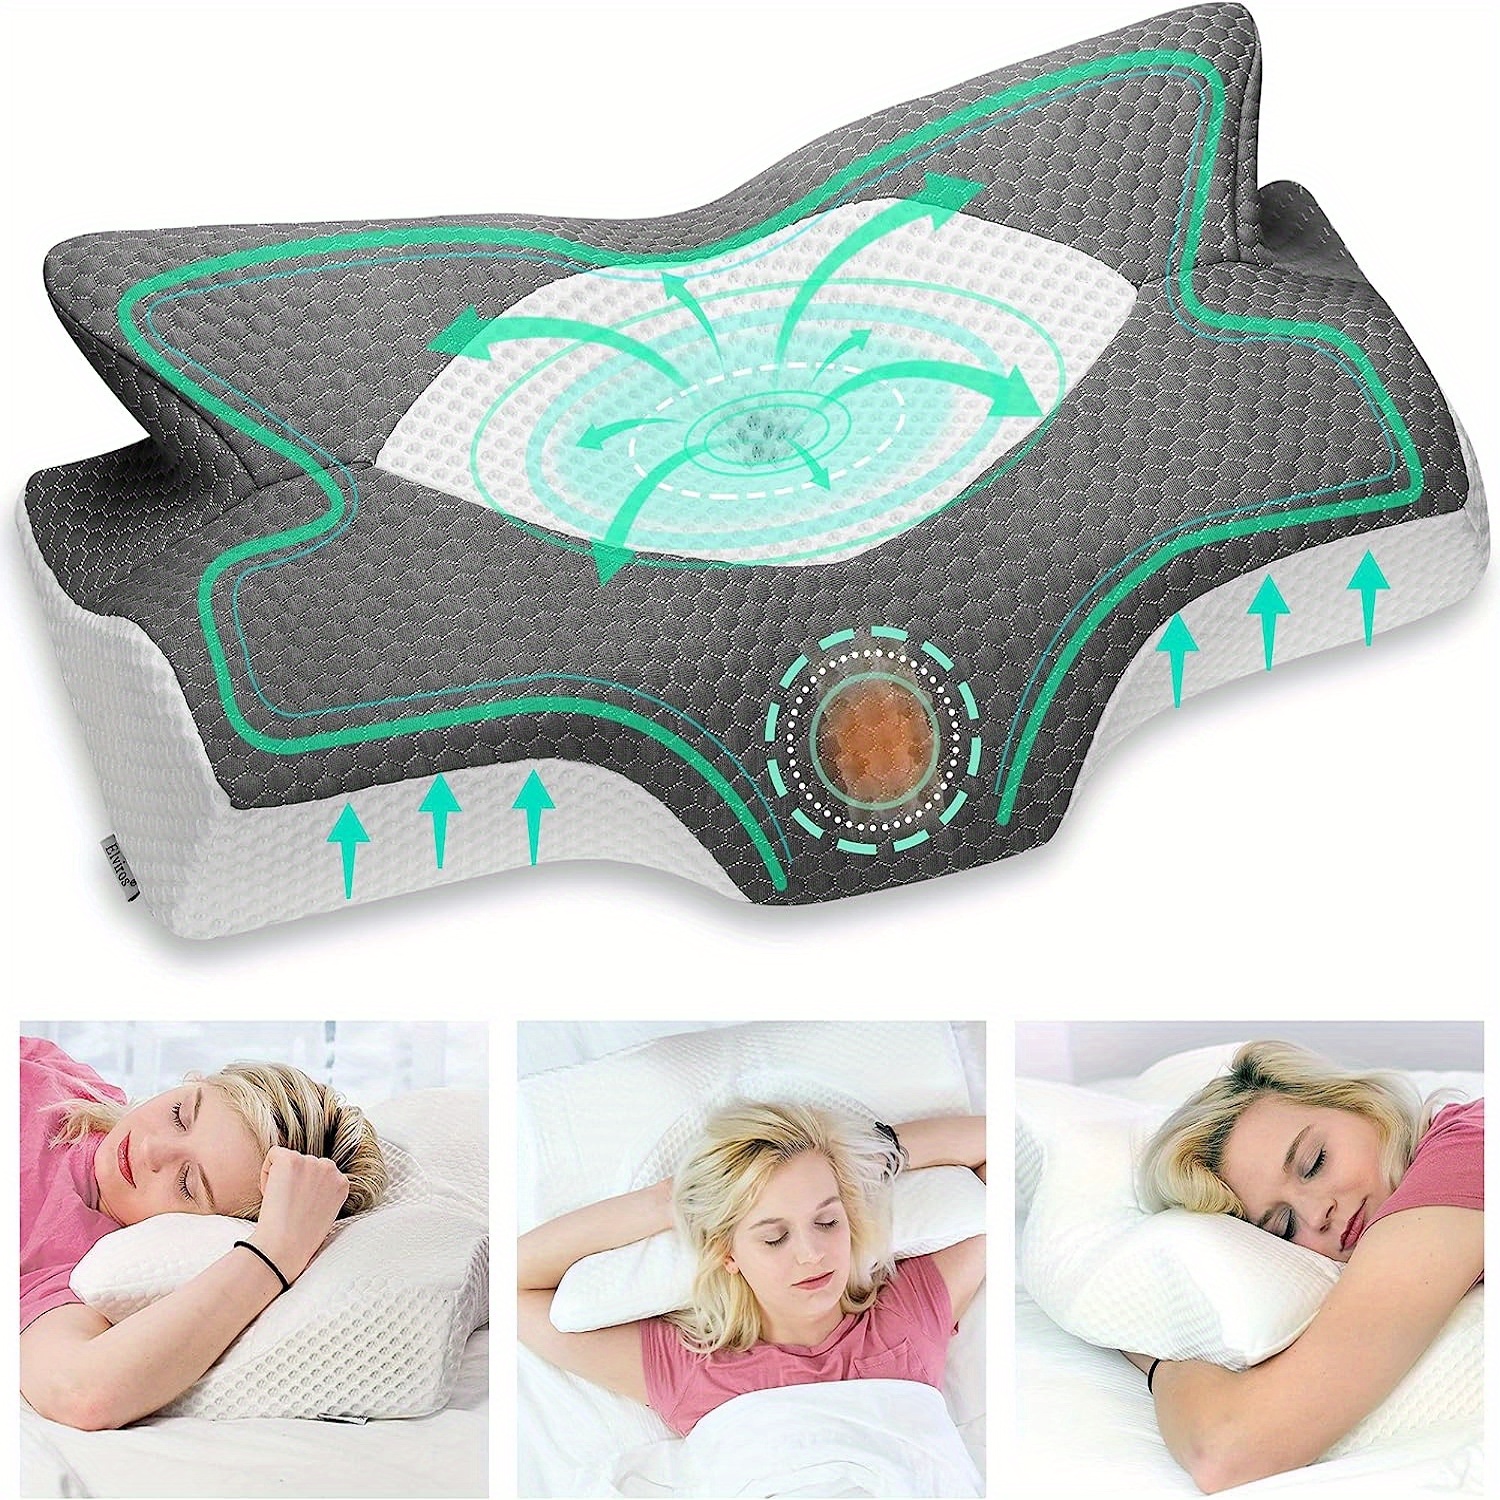 Pu Foam Contoured Cervical Pillow Neck Support, Size: Universal